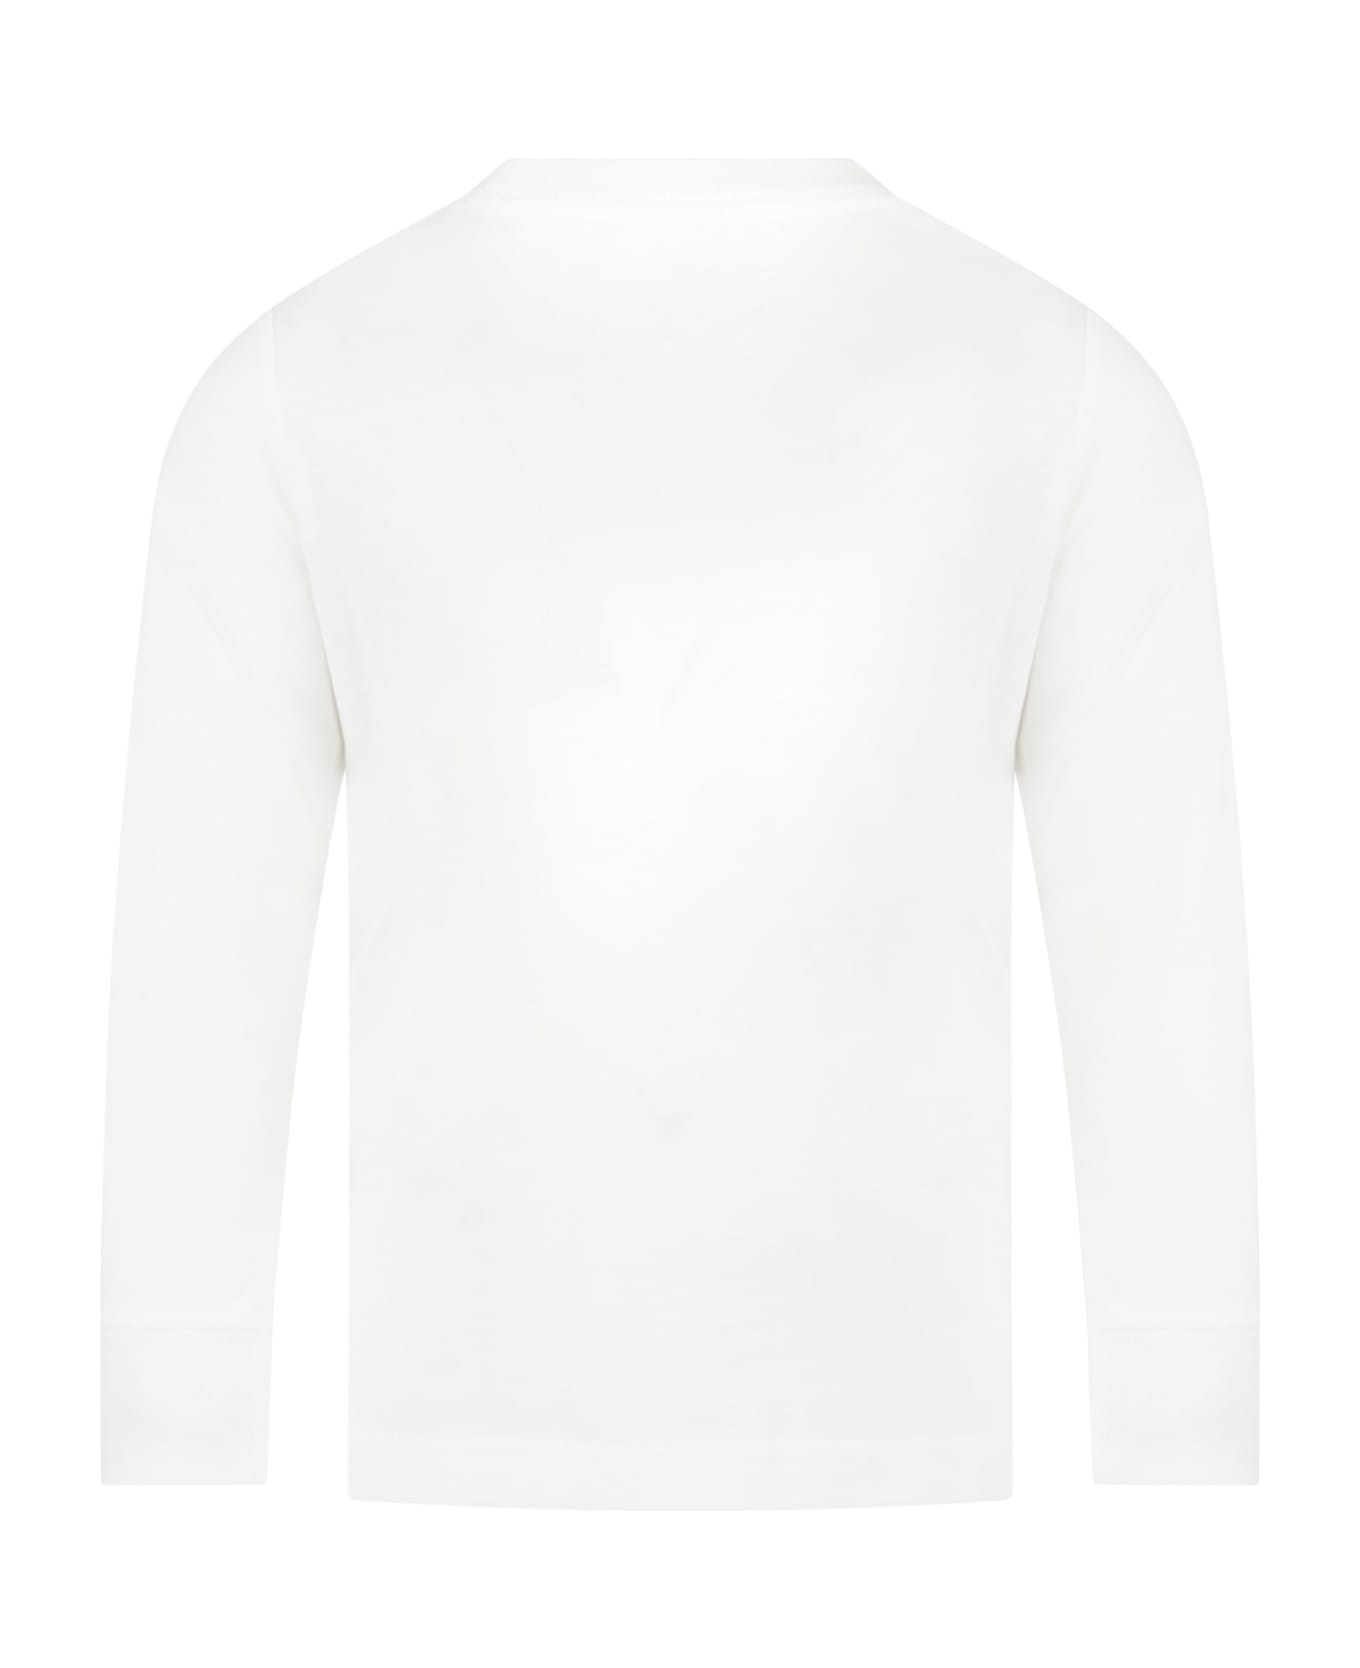 Levi's White T-shirt For Kids With Logo - White